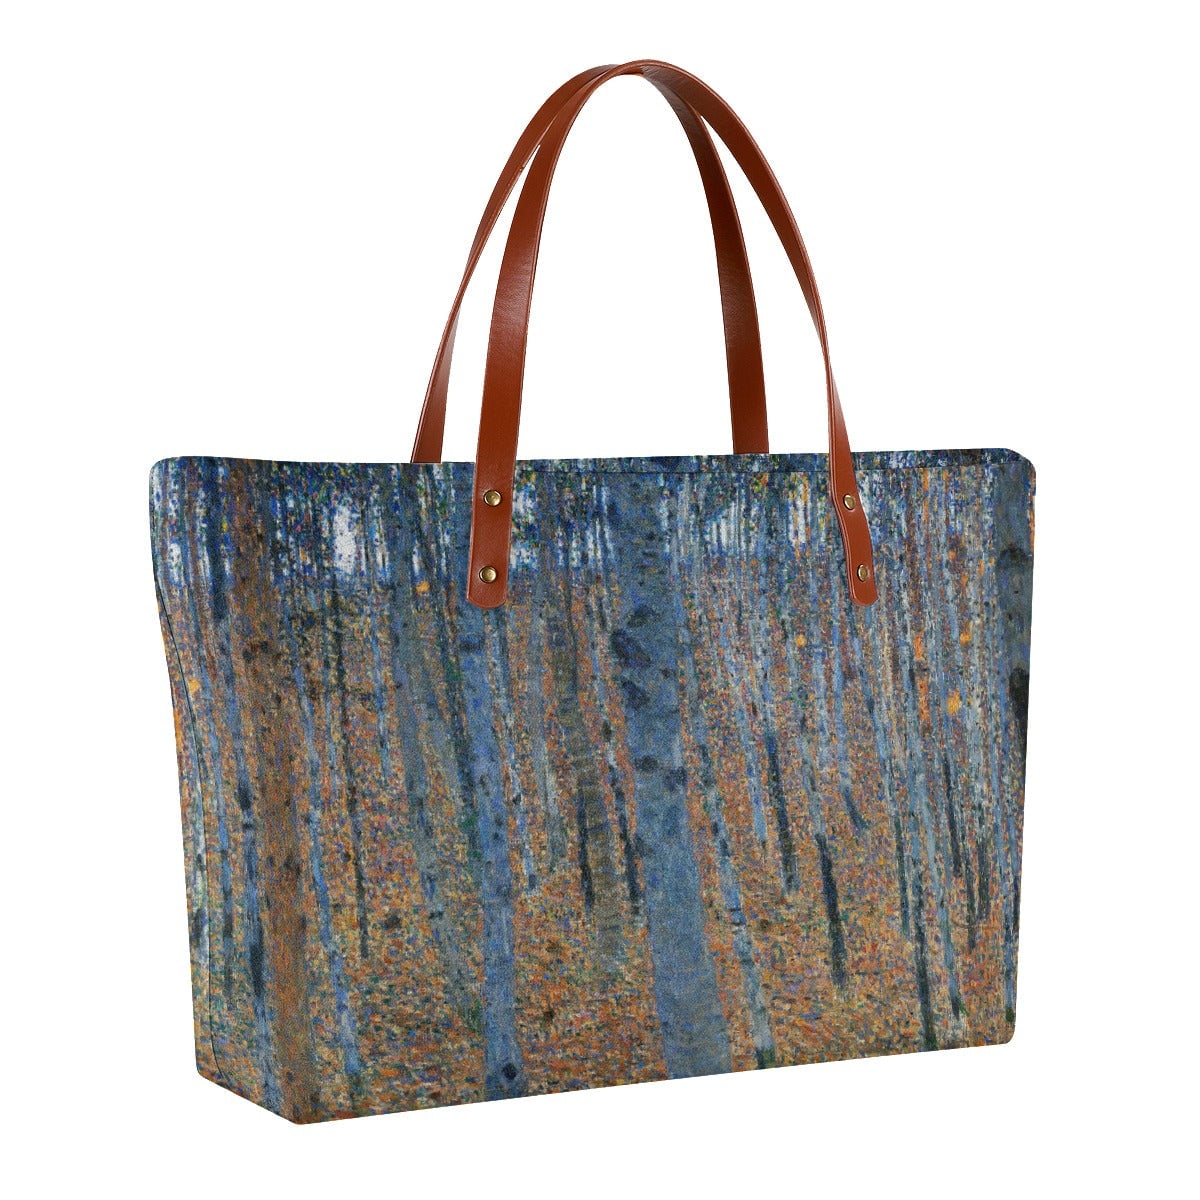 Beech Grove I by Gustav Klimt Painting Tote Bag